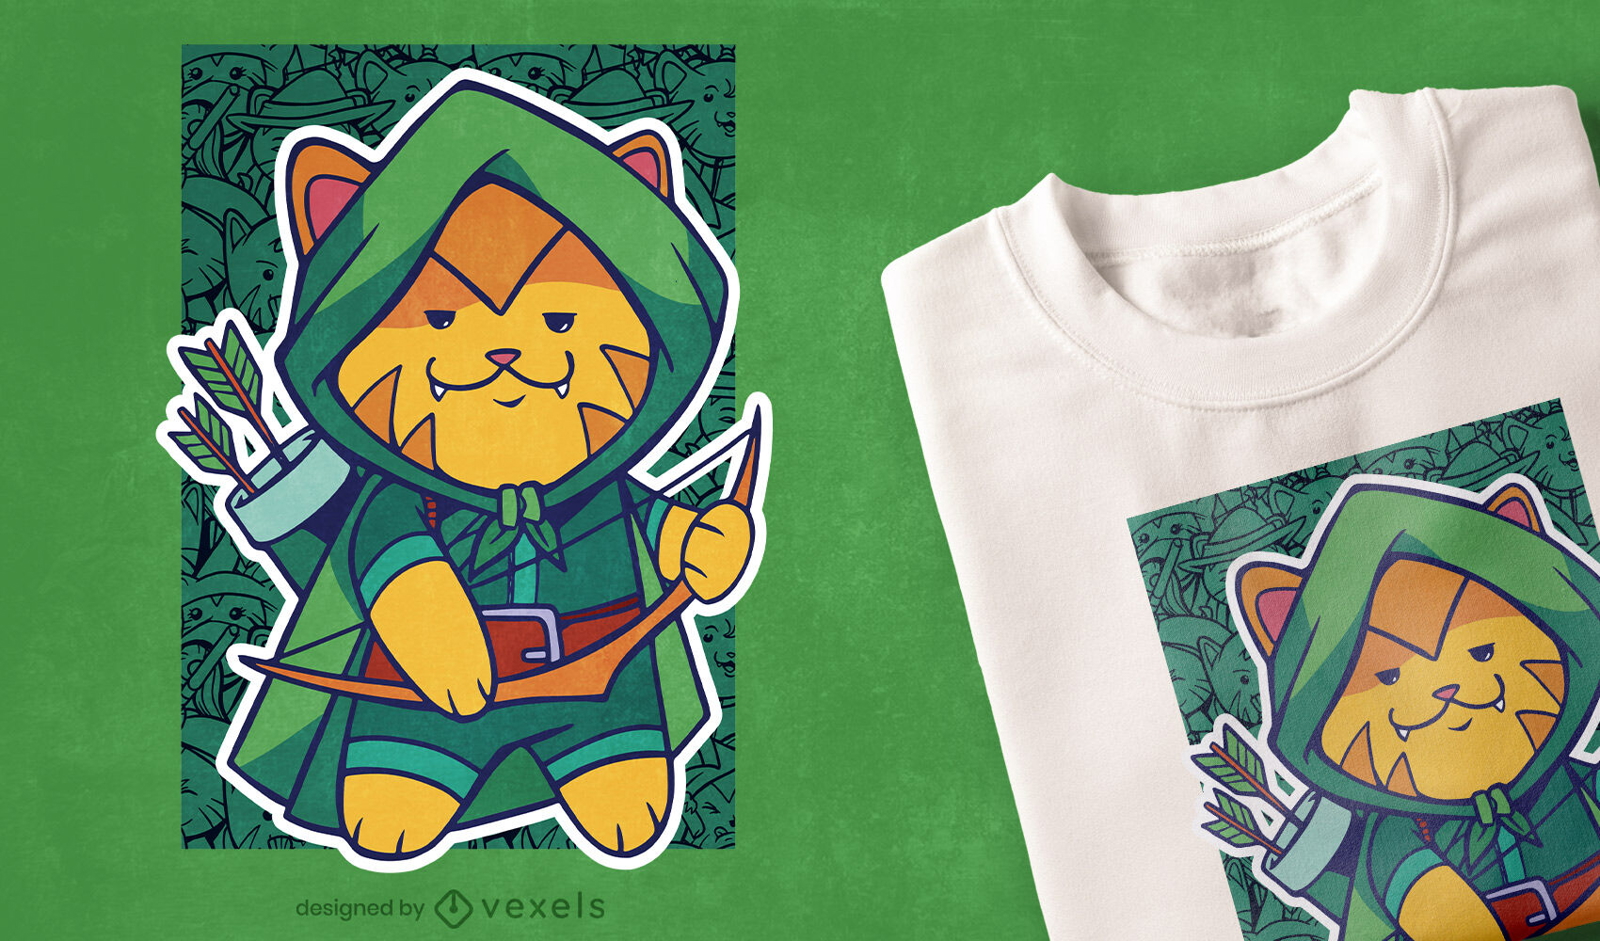 Archer cat t-shirt design